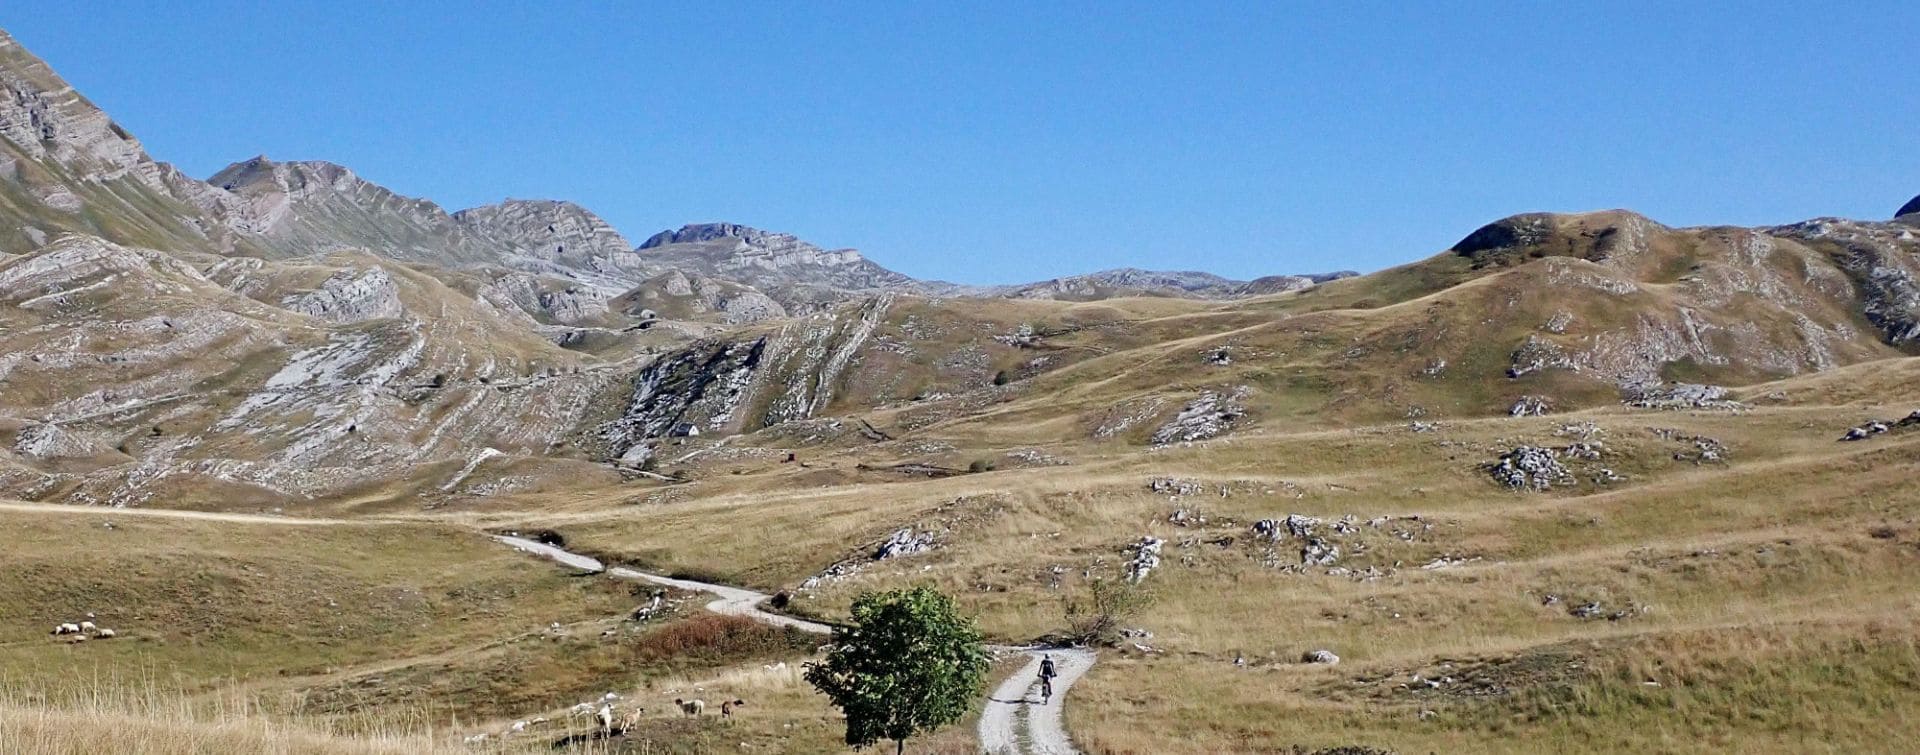 road in karst landscape of the trans balkan race